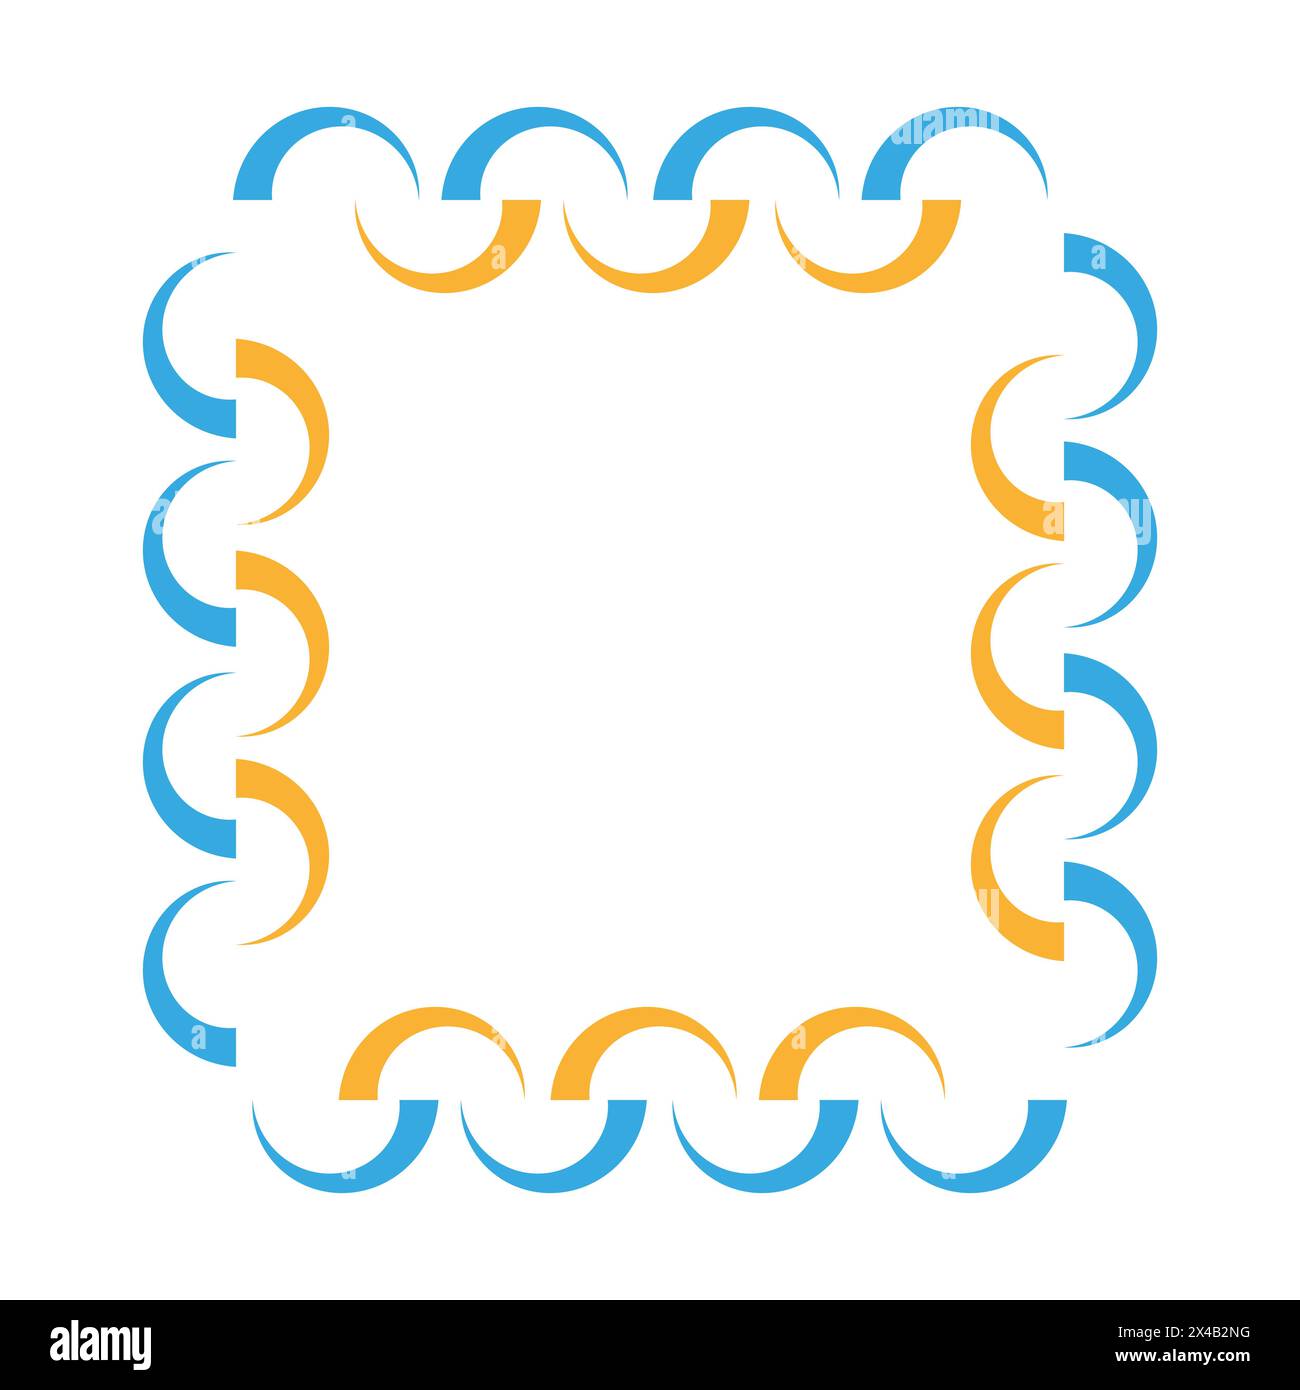 Geometric link border design. Chain pattern frame Vector. Interlocking loops square border. Decorative connection motif. EPS 10. Stock Vector